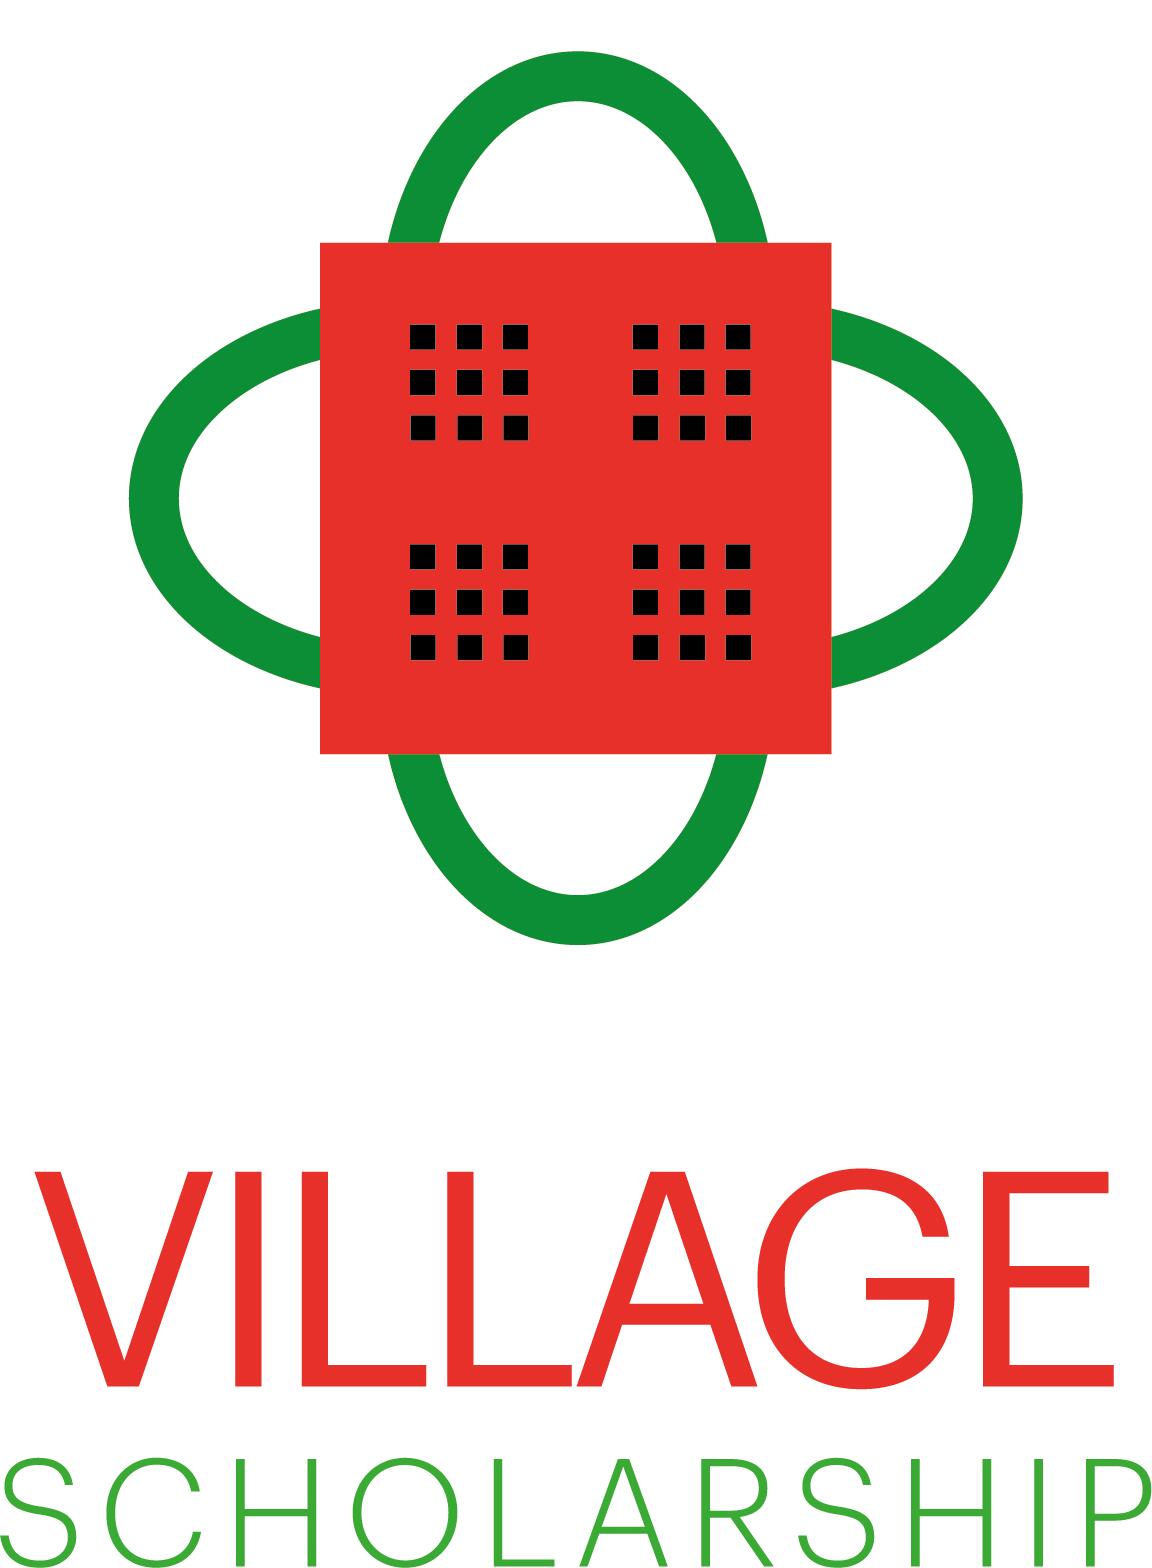 Village scholarship logo